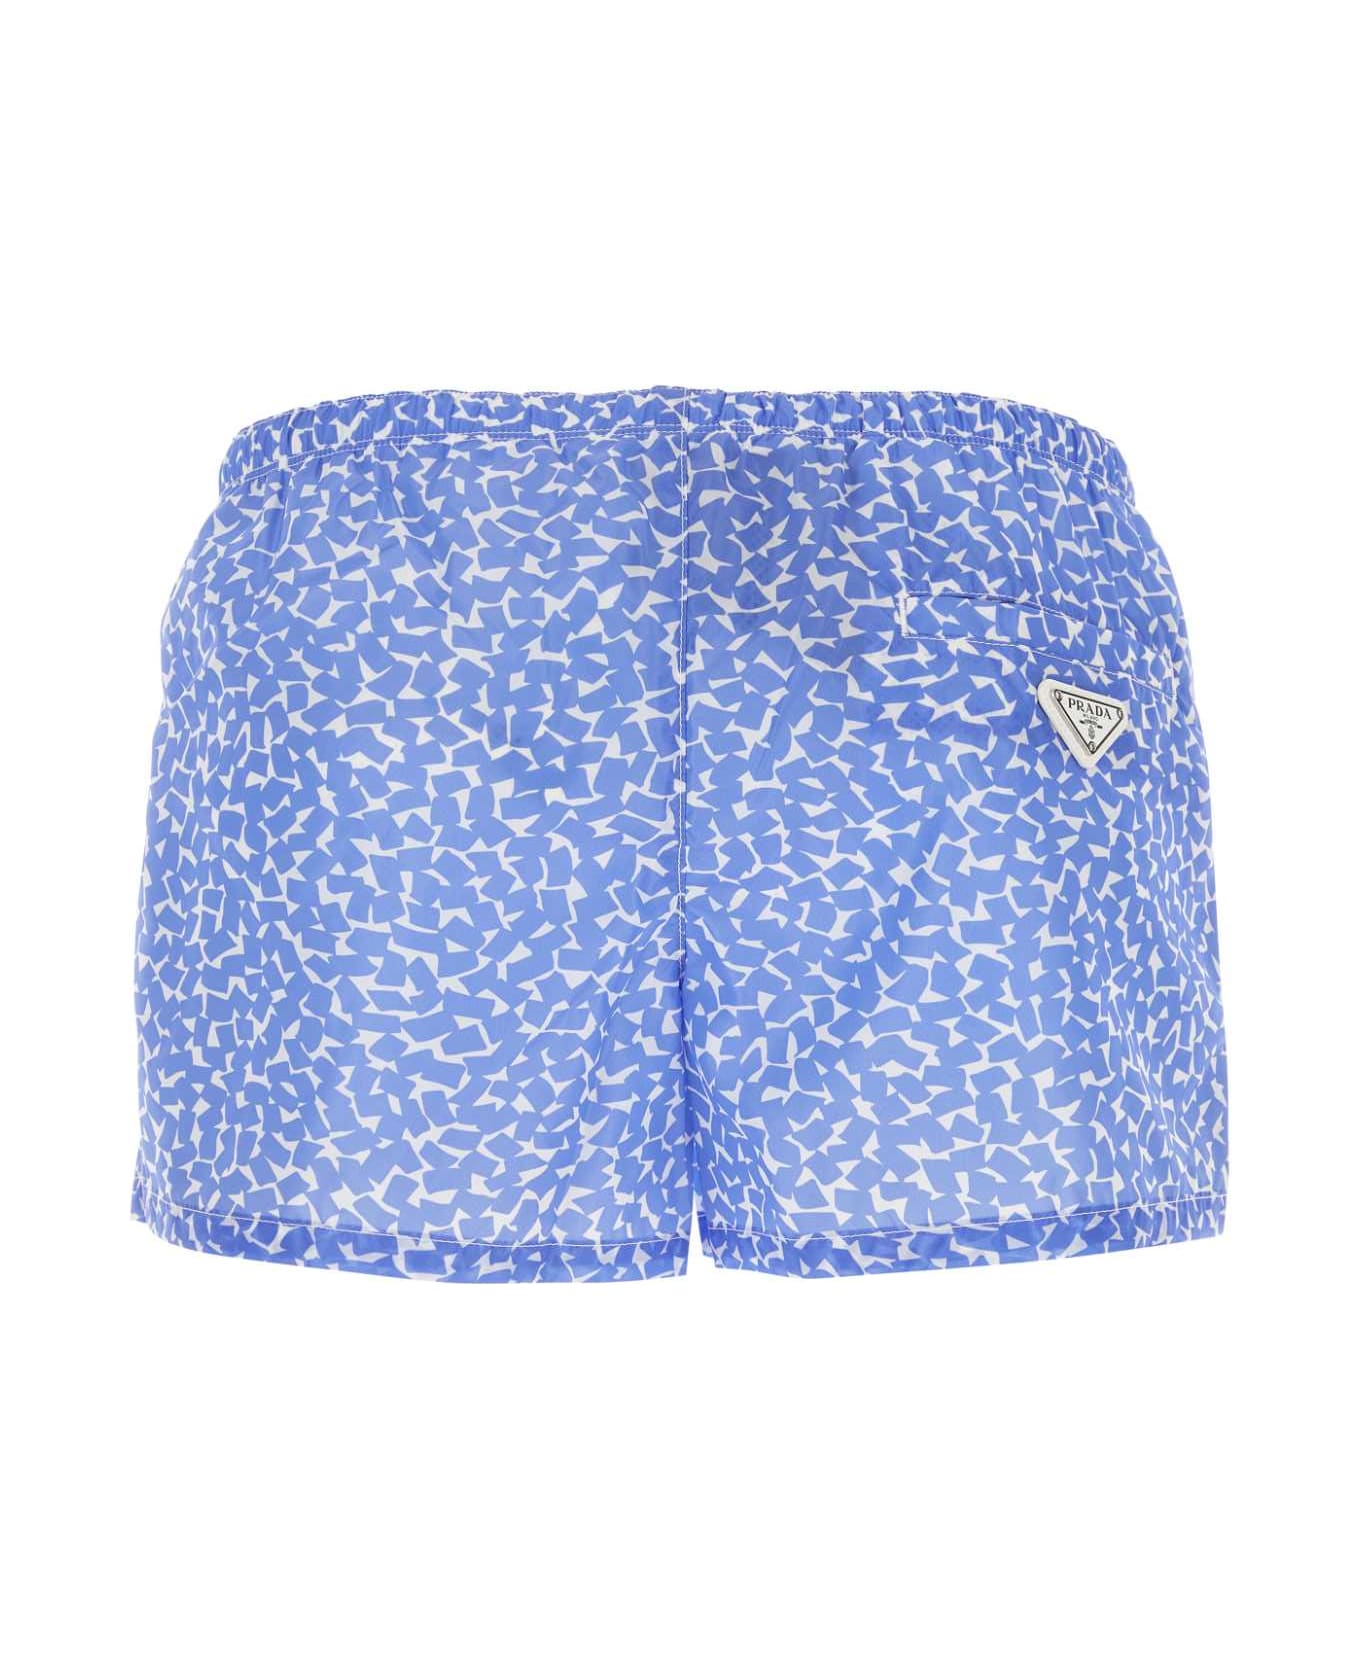 Prada Printed Nylon Swimming Shorts - CELESTE